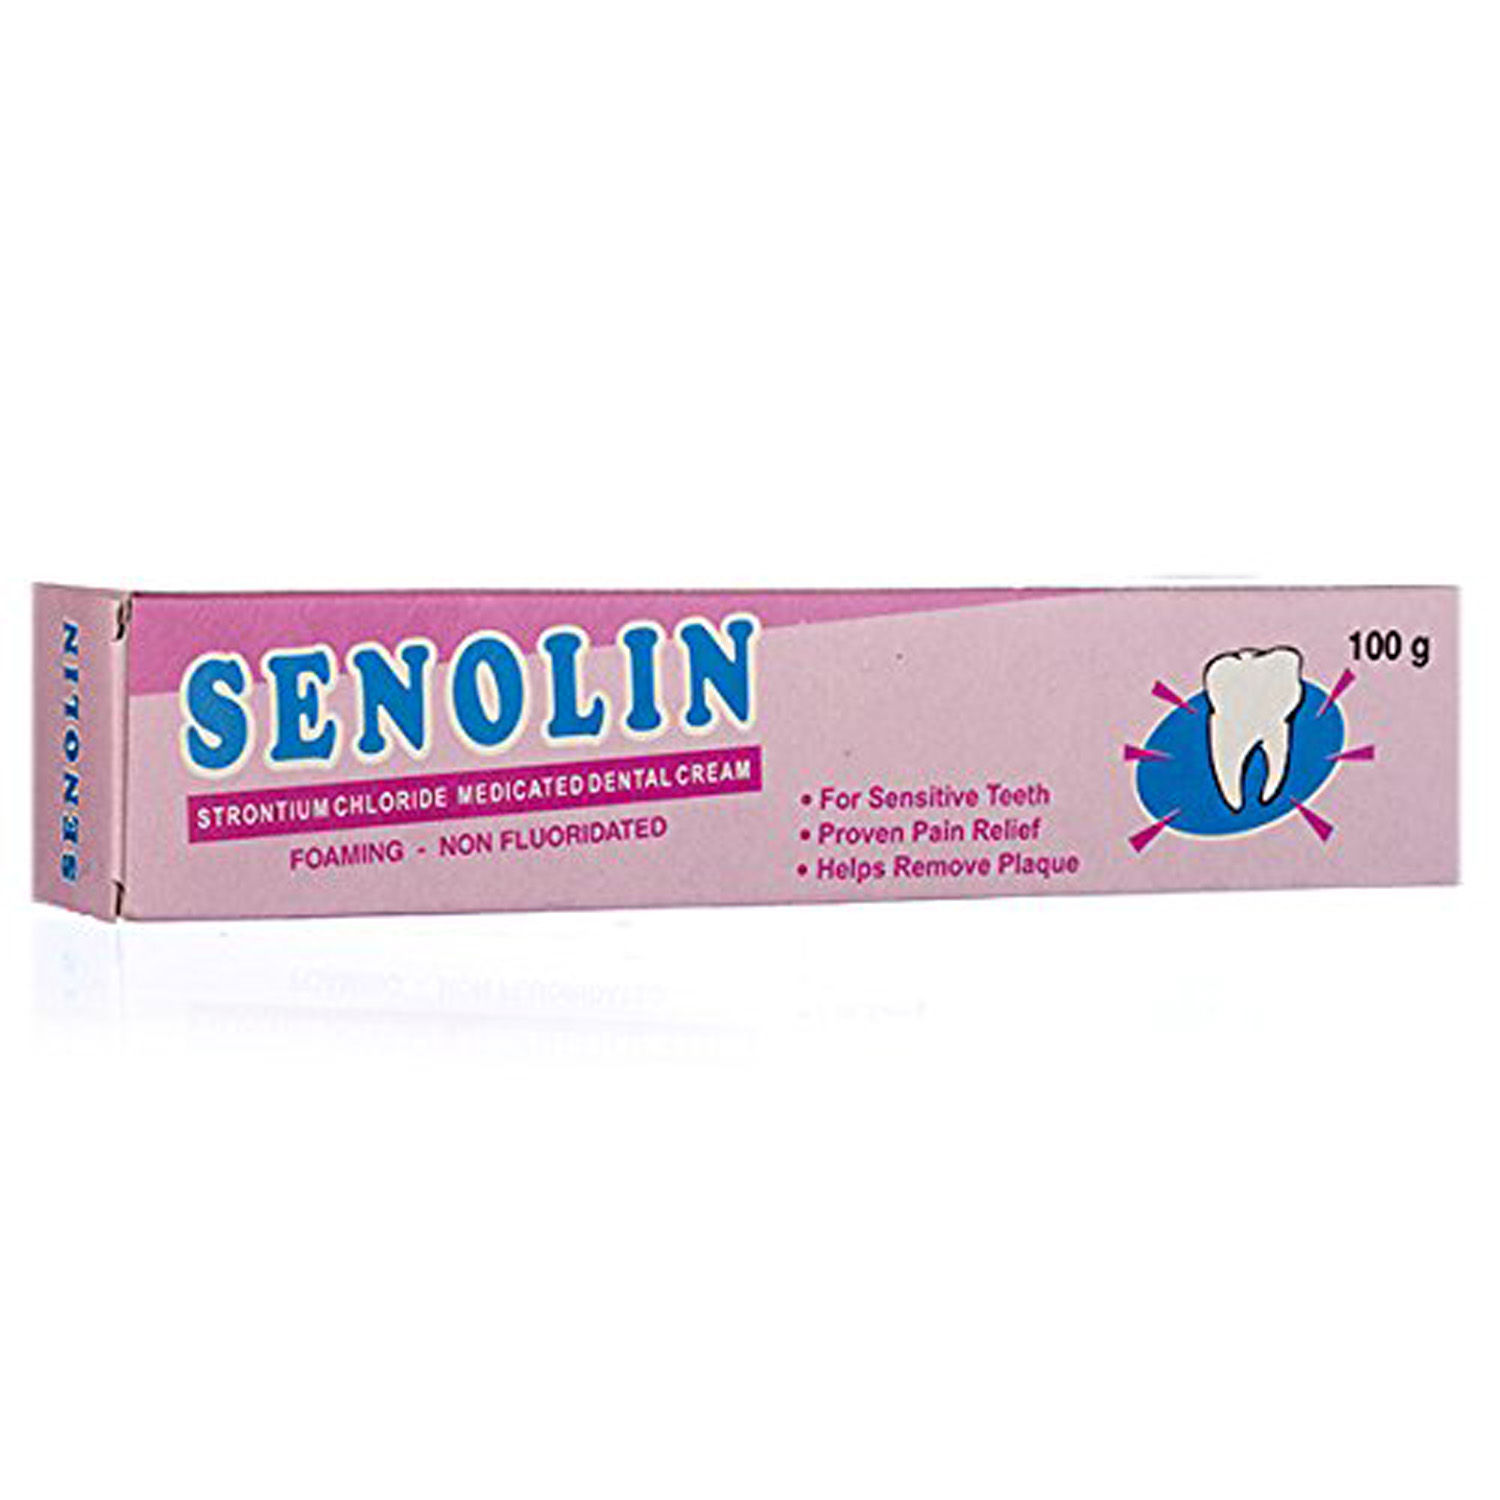 Senolin Toothpaste, 100 gm, Pack of 1 